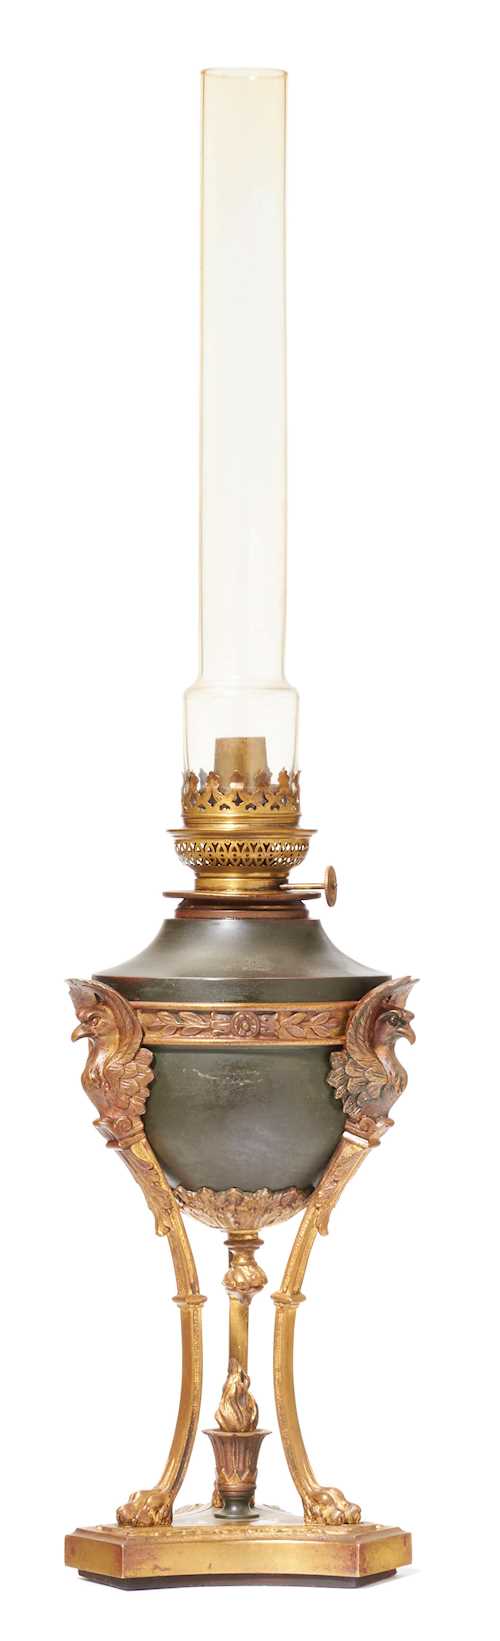 PETROLEUM-LAMPE